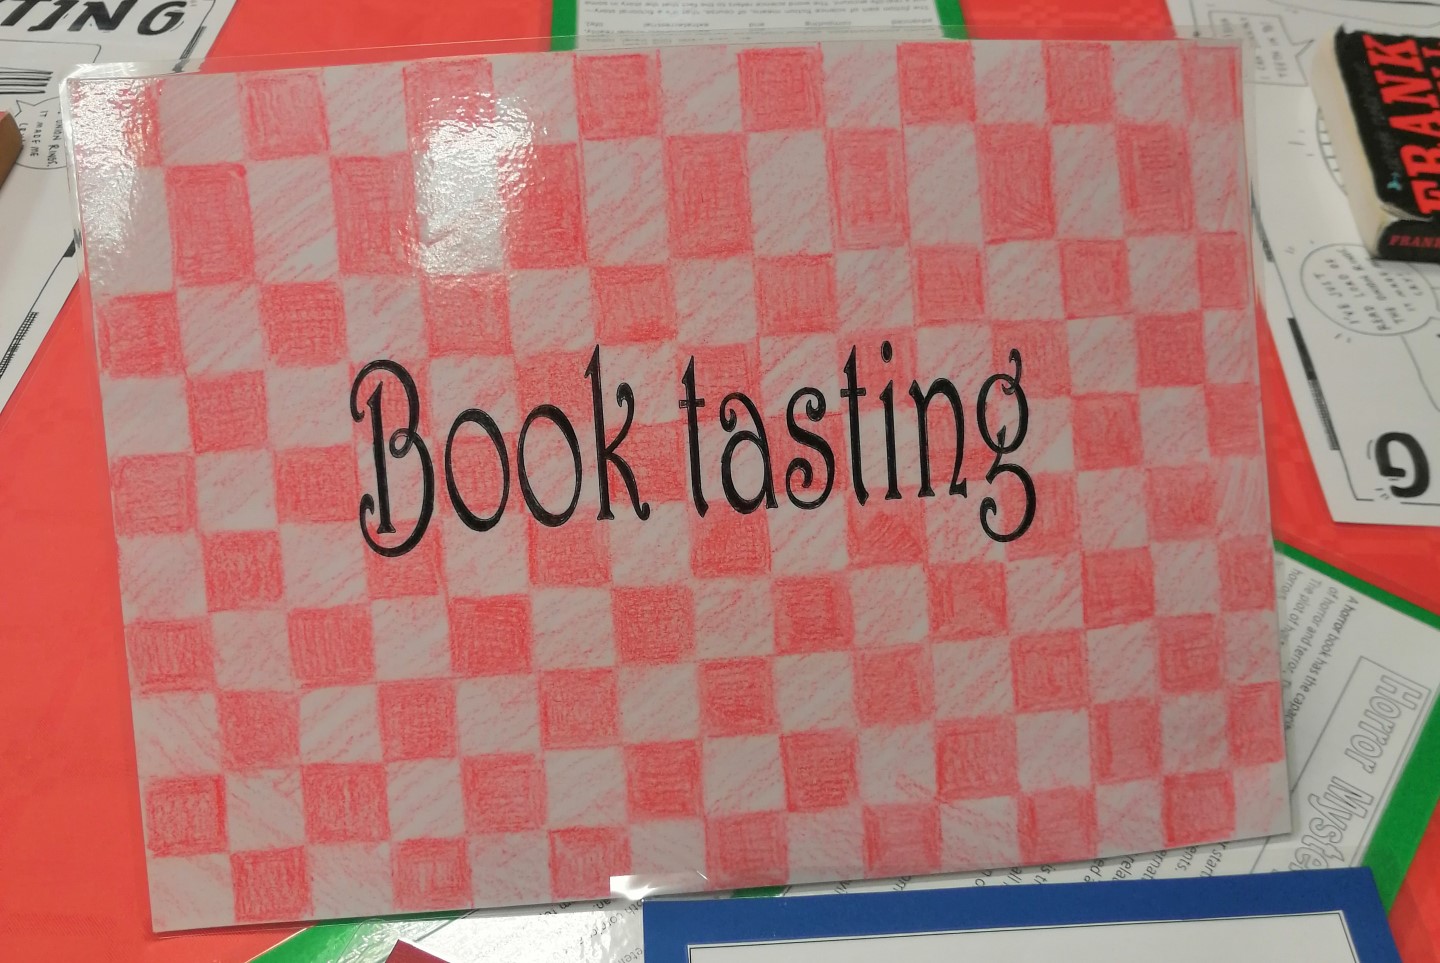 Book tasting - December 23